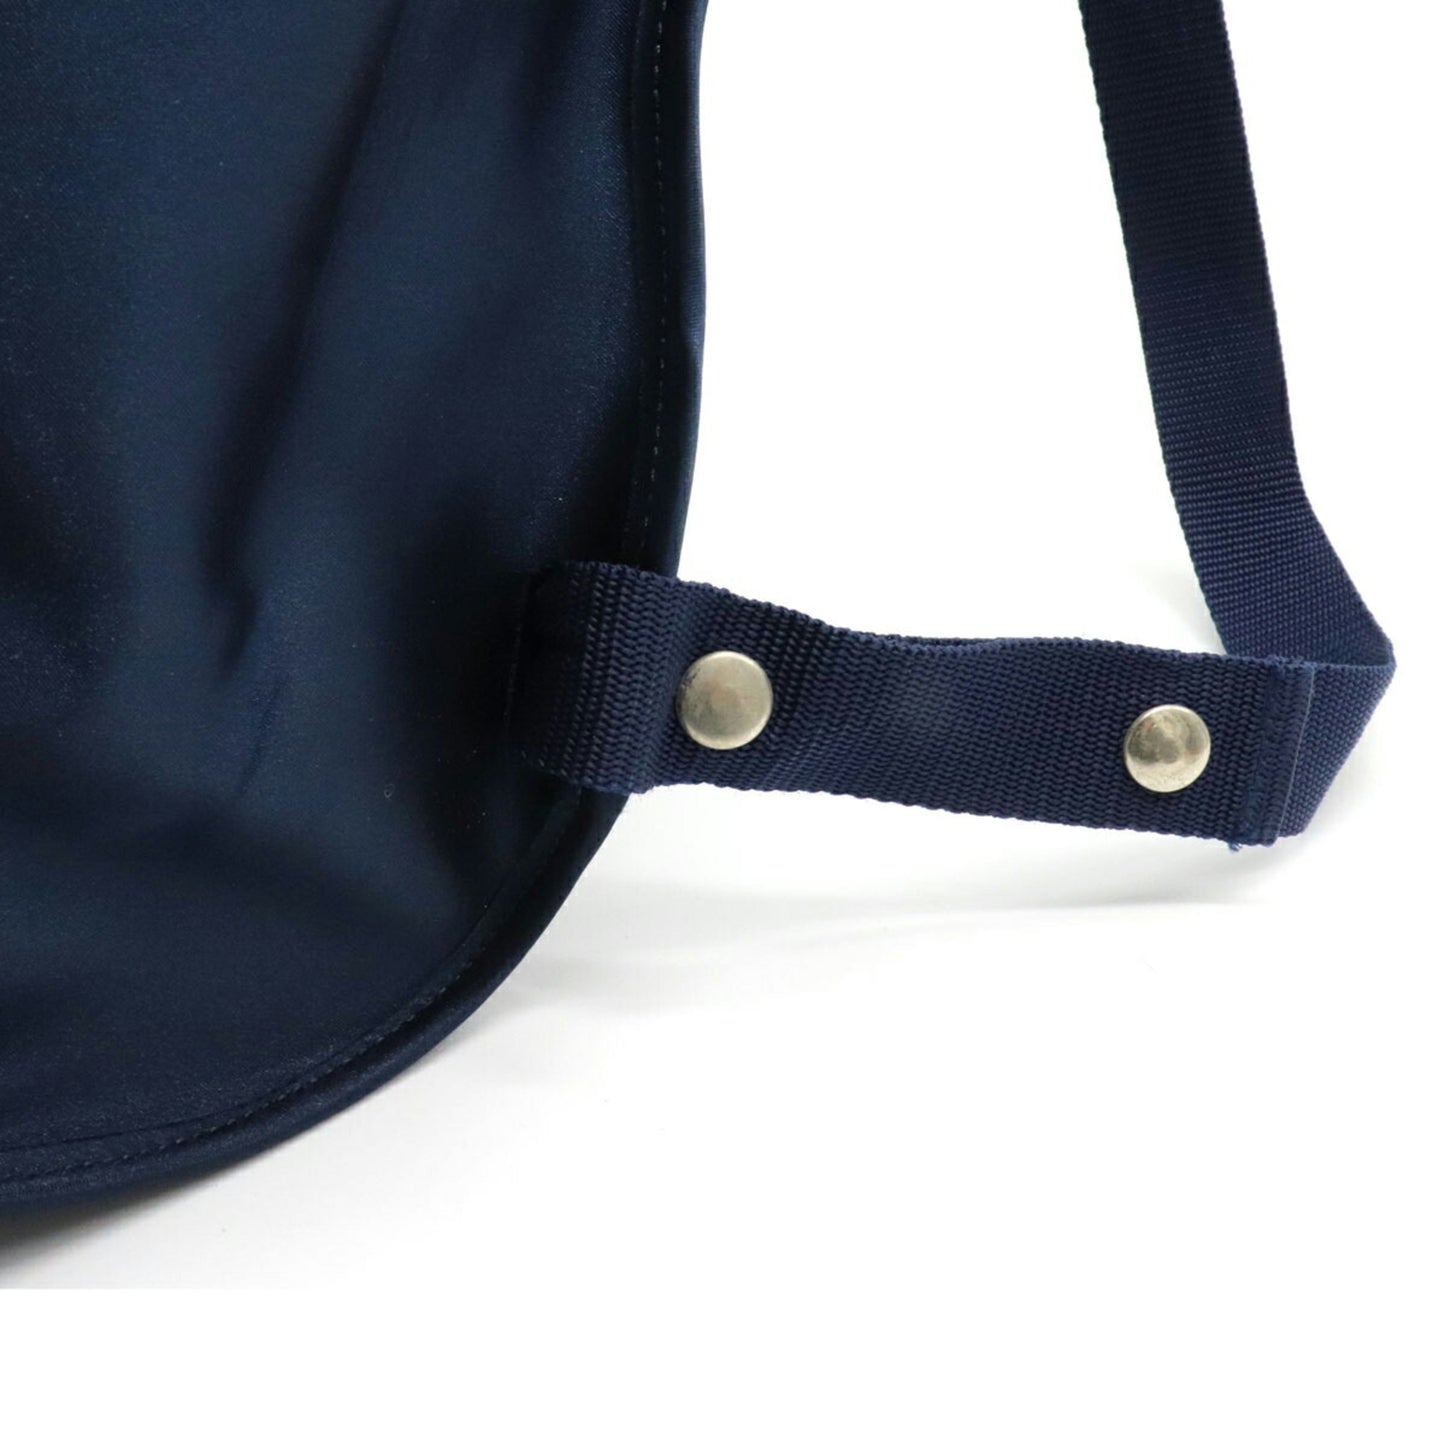 Hermes Women's Navy Synthetic Handbag by Hermes in Navy